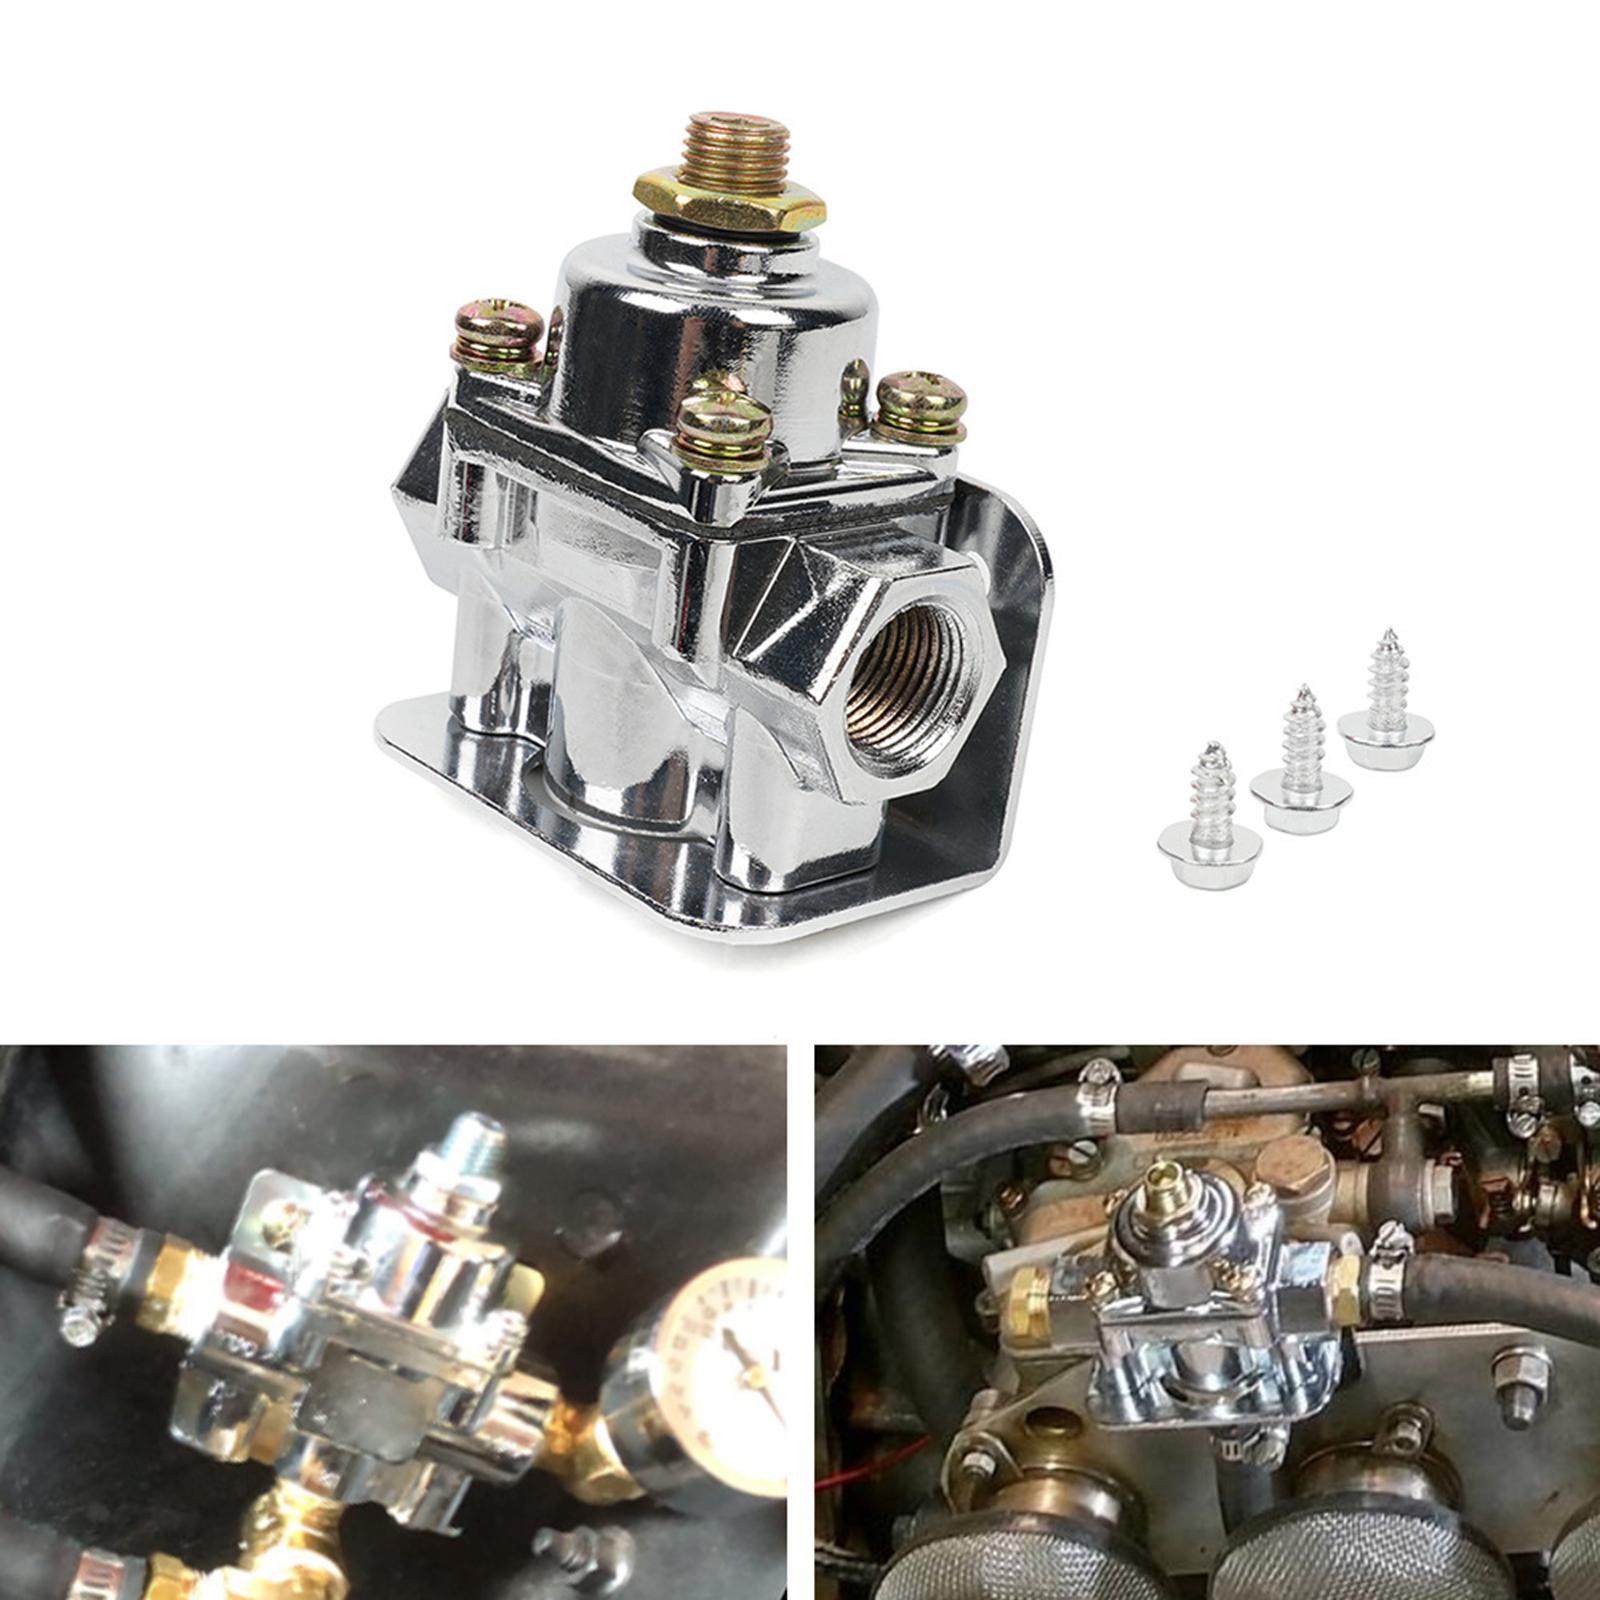 Carbureted Fuel Pressure Regulator Replacement Parts /8" NPT Ports Adjustable Fuel Regulator for Carburetors Engine Durable Parts